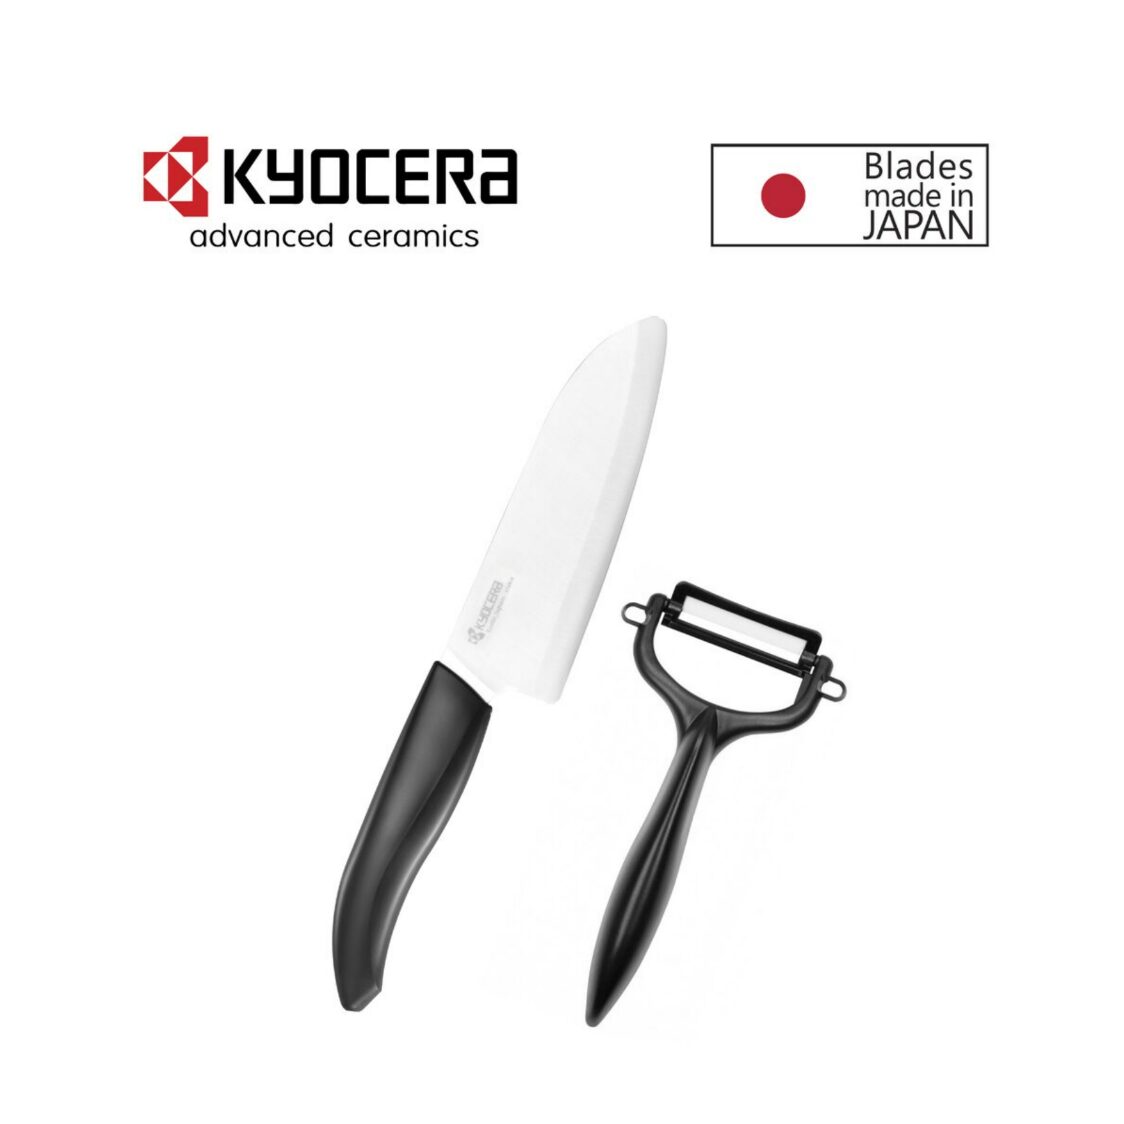 KYOCERA 55 Advanced Ceramic Santoku Knife  Peeler Set - Black FK140WH-CP10N BK